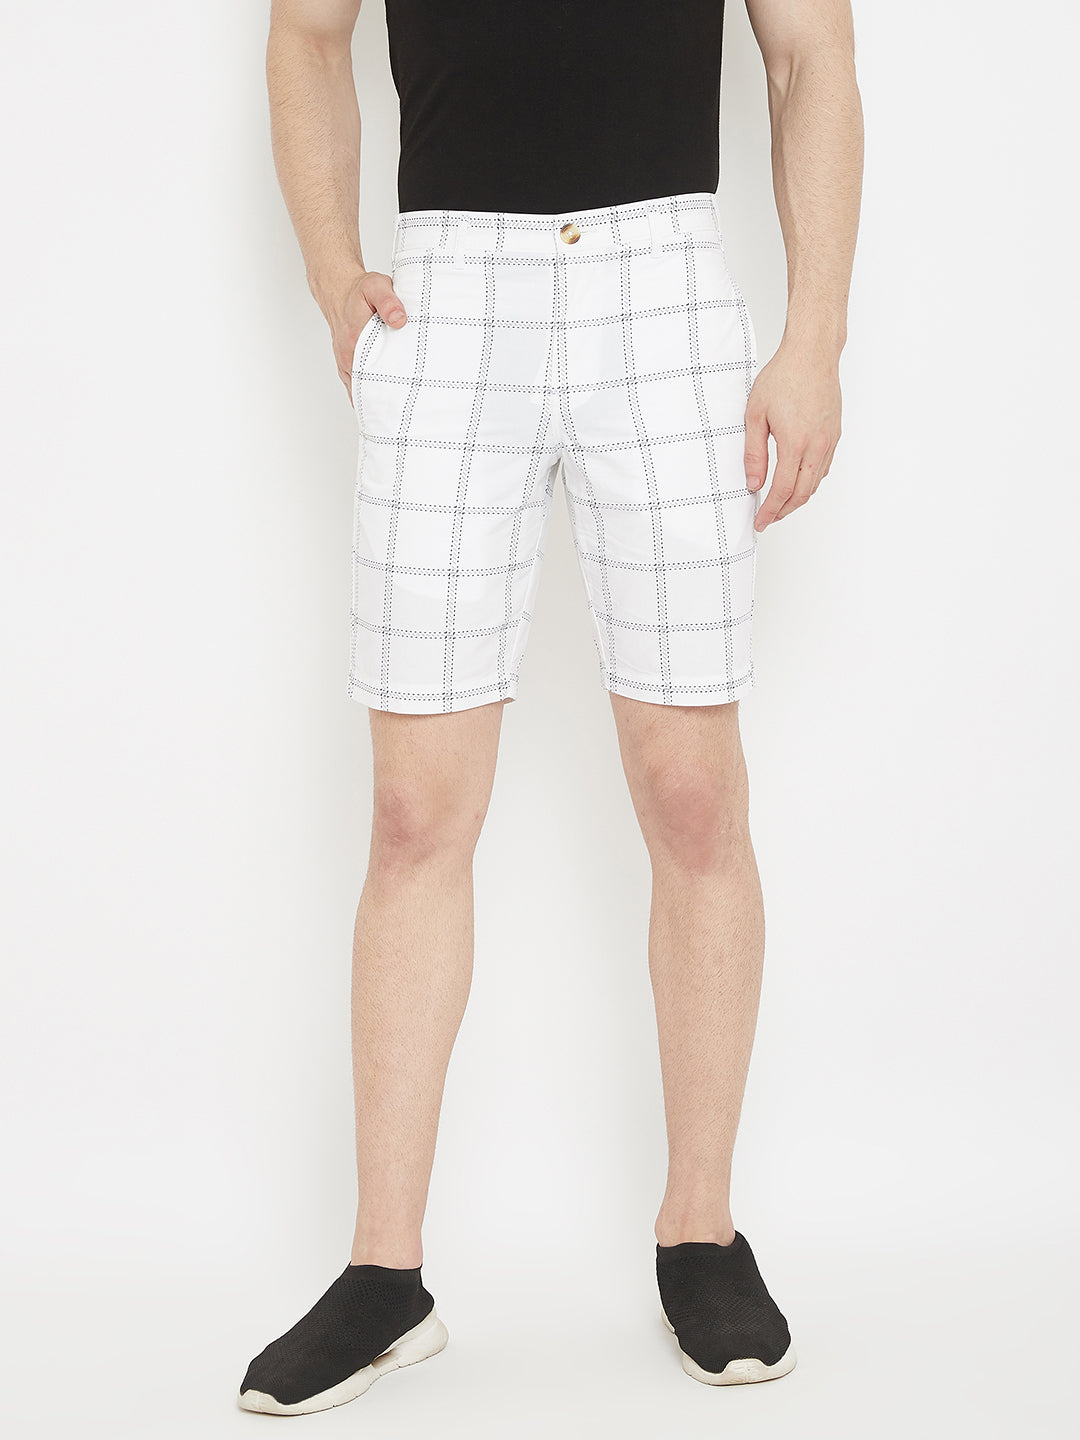 White Checked shorts - Men Shorts